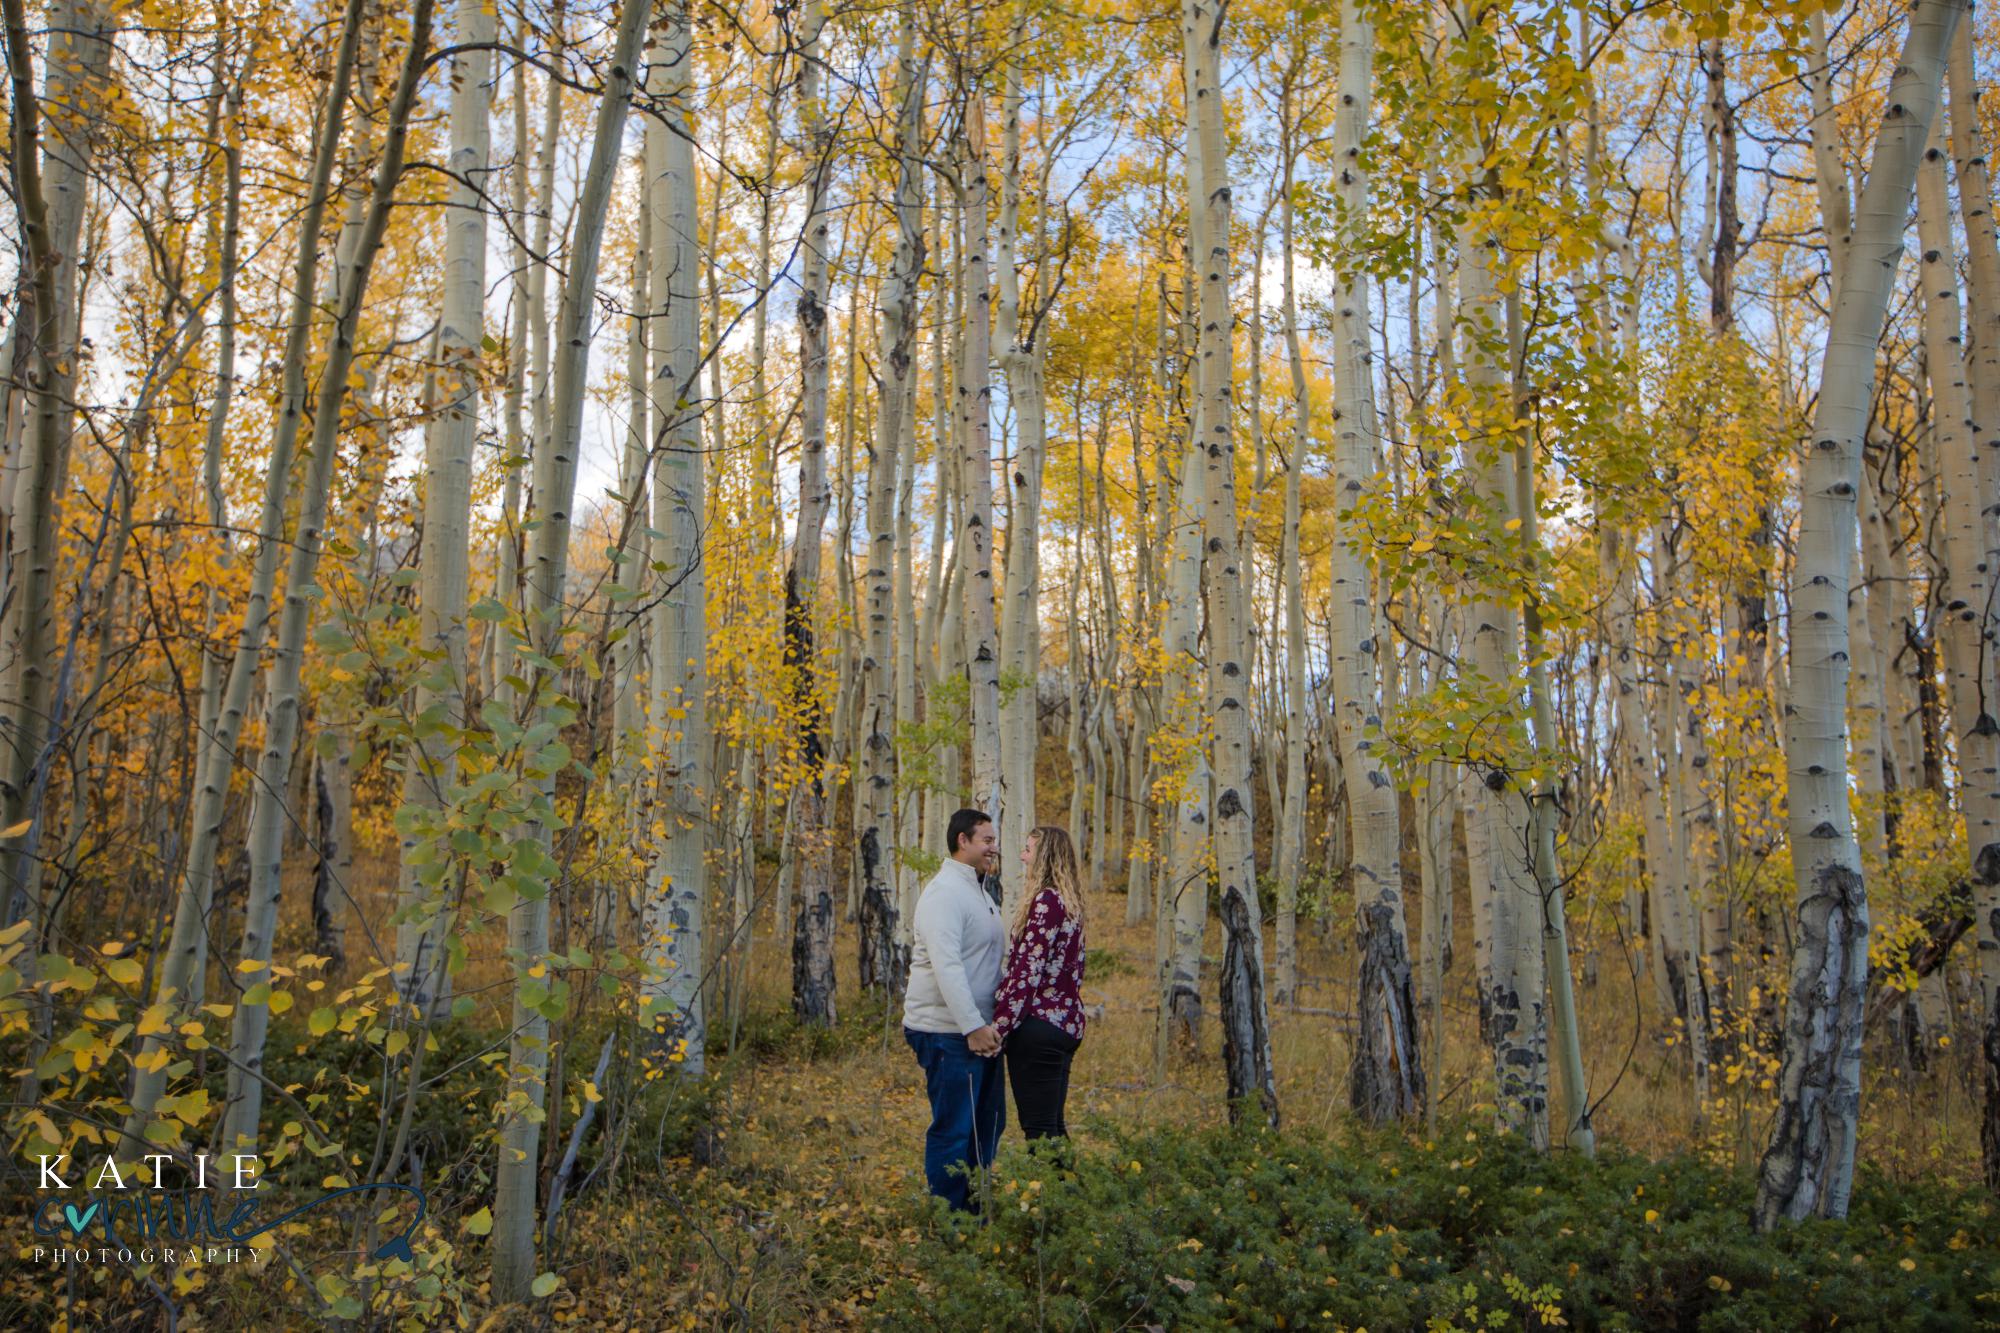 Colorado engaged couple among fall leaves